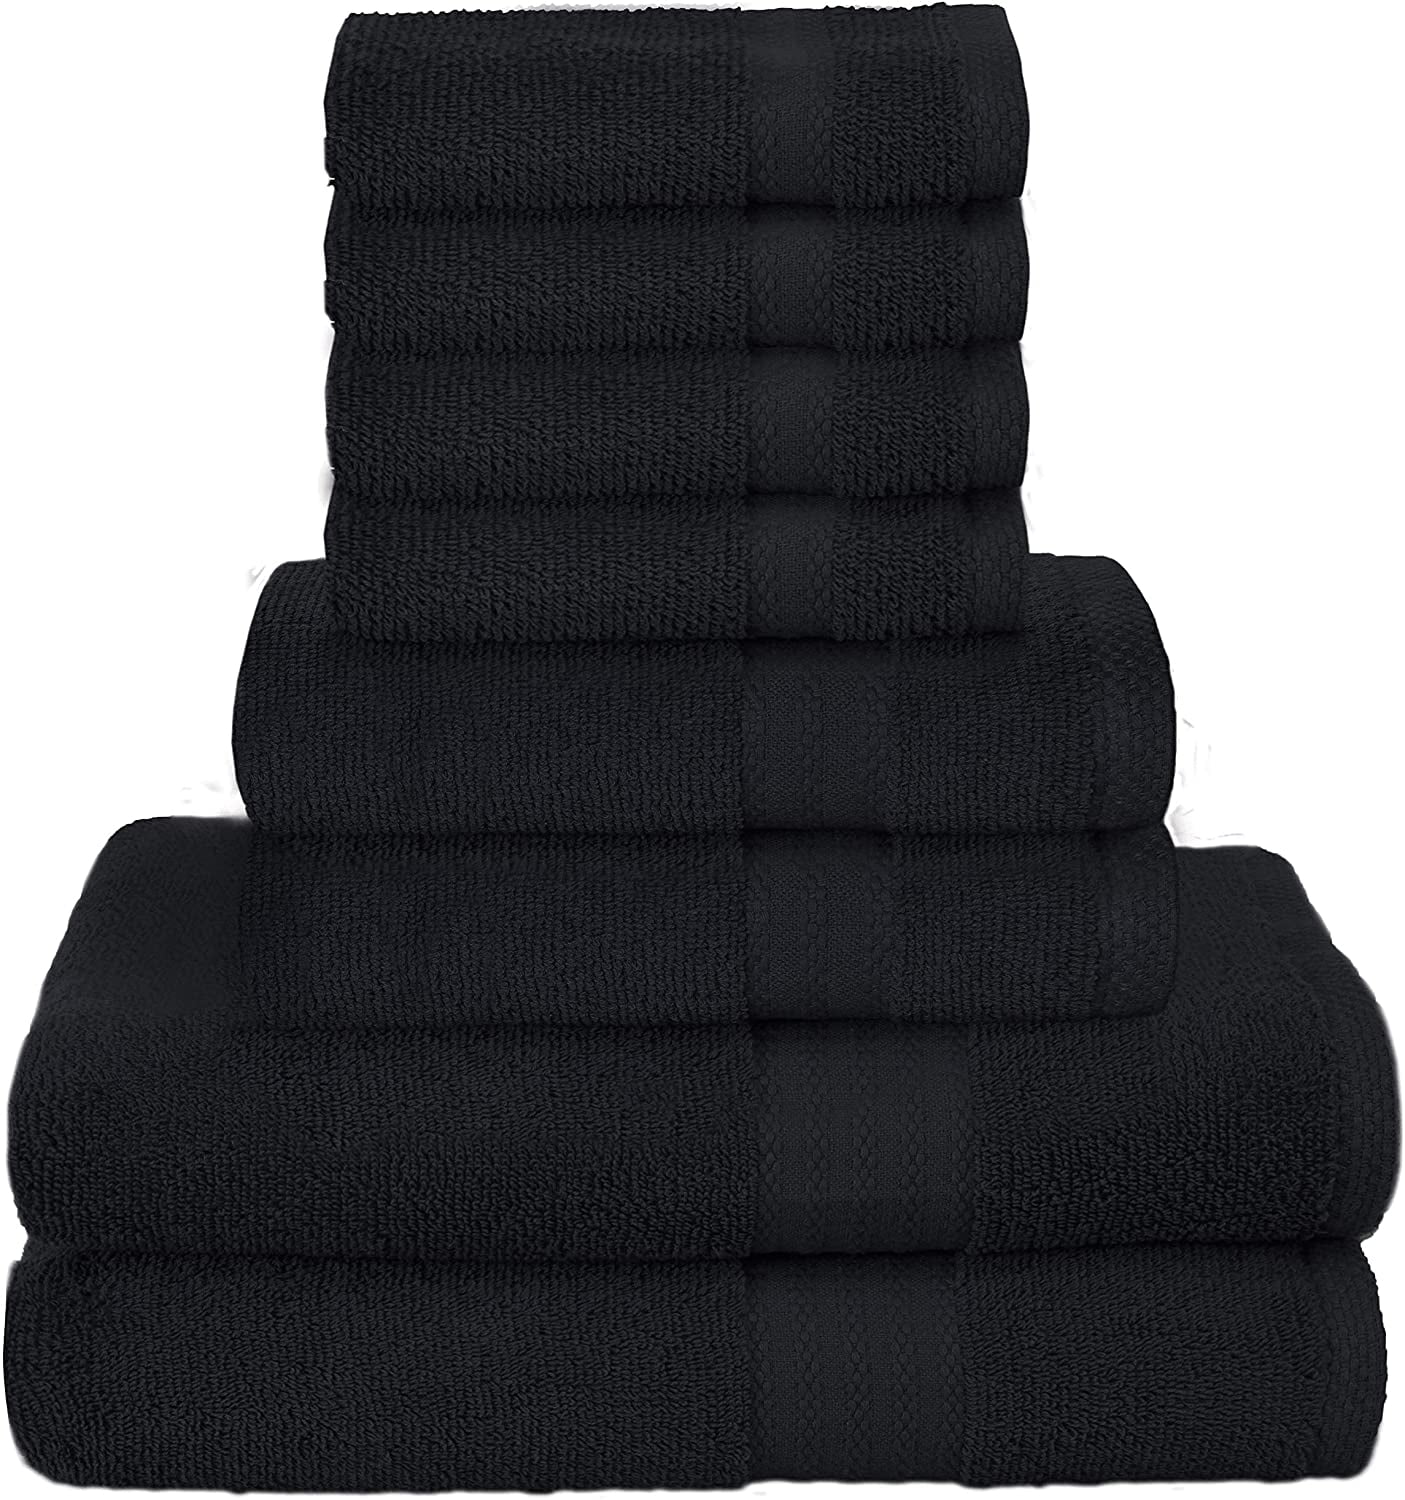 Lavex Luxury 27 x 54 100% Combed Ring-Spun Cotton Bath Towel 17 lb. - 12/